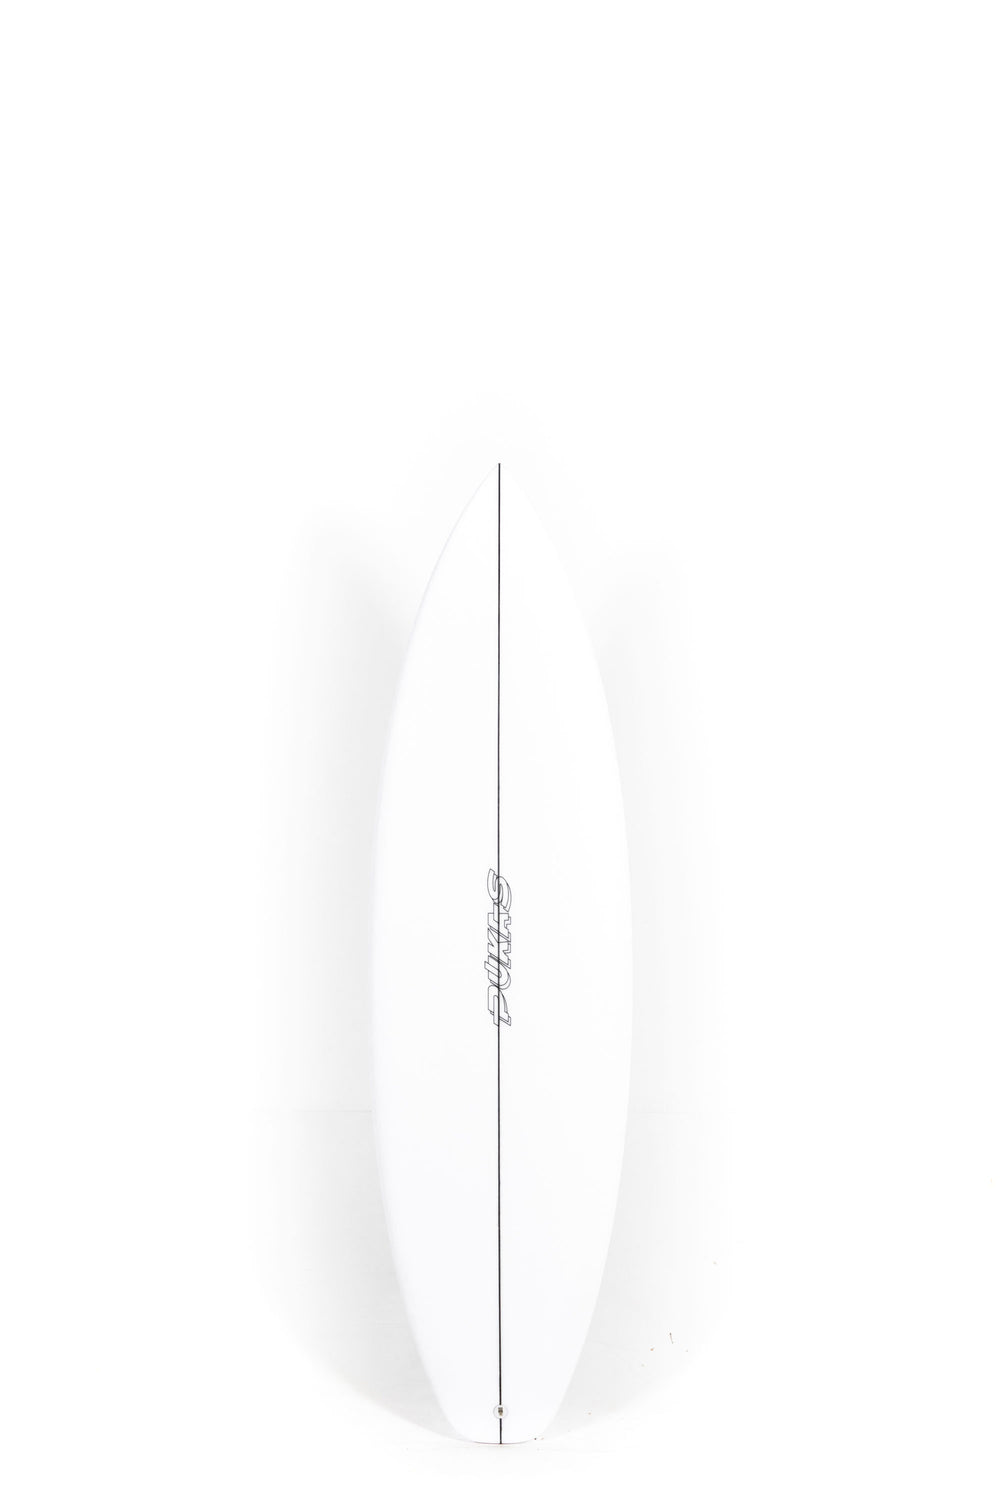 Pukas Surf Shop - Pukas Surfboard - BEACHY MOOD by David Santos - 6'2